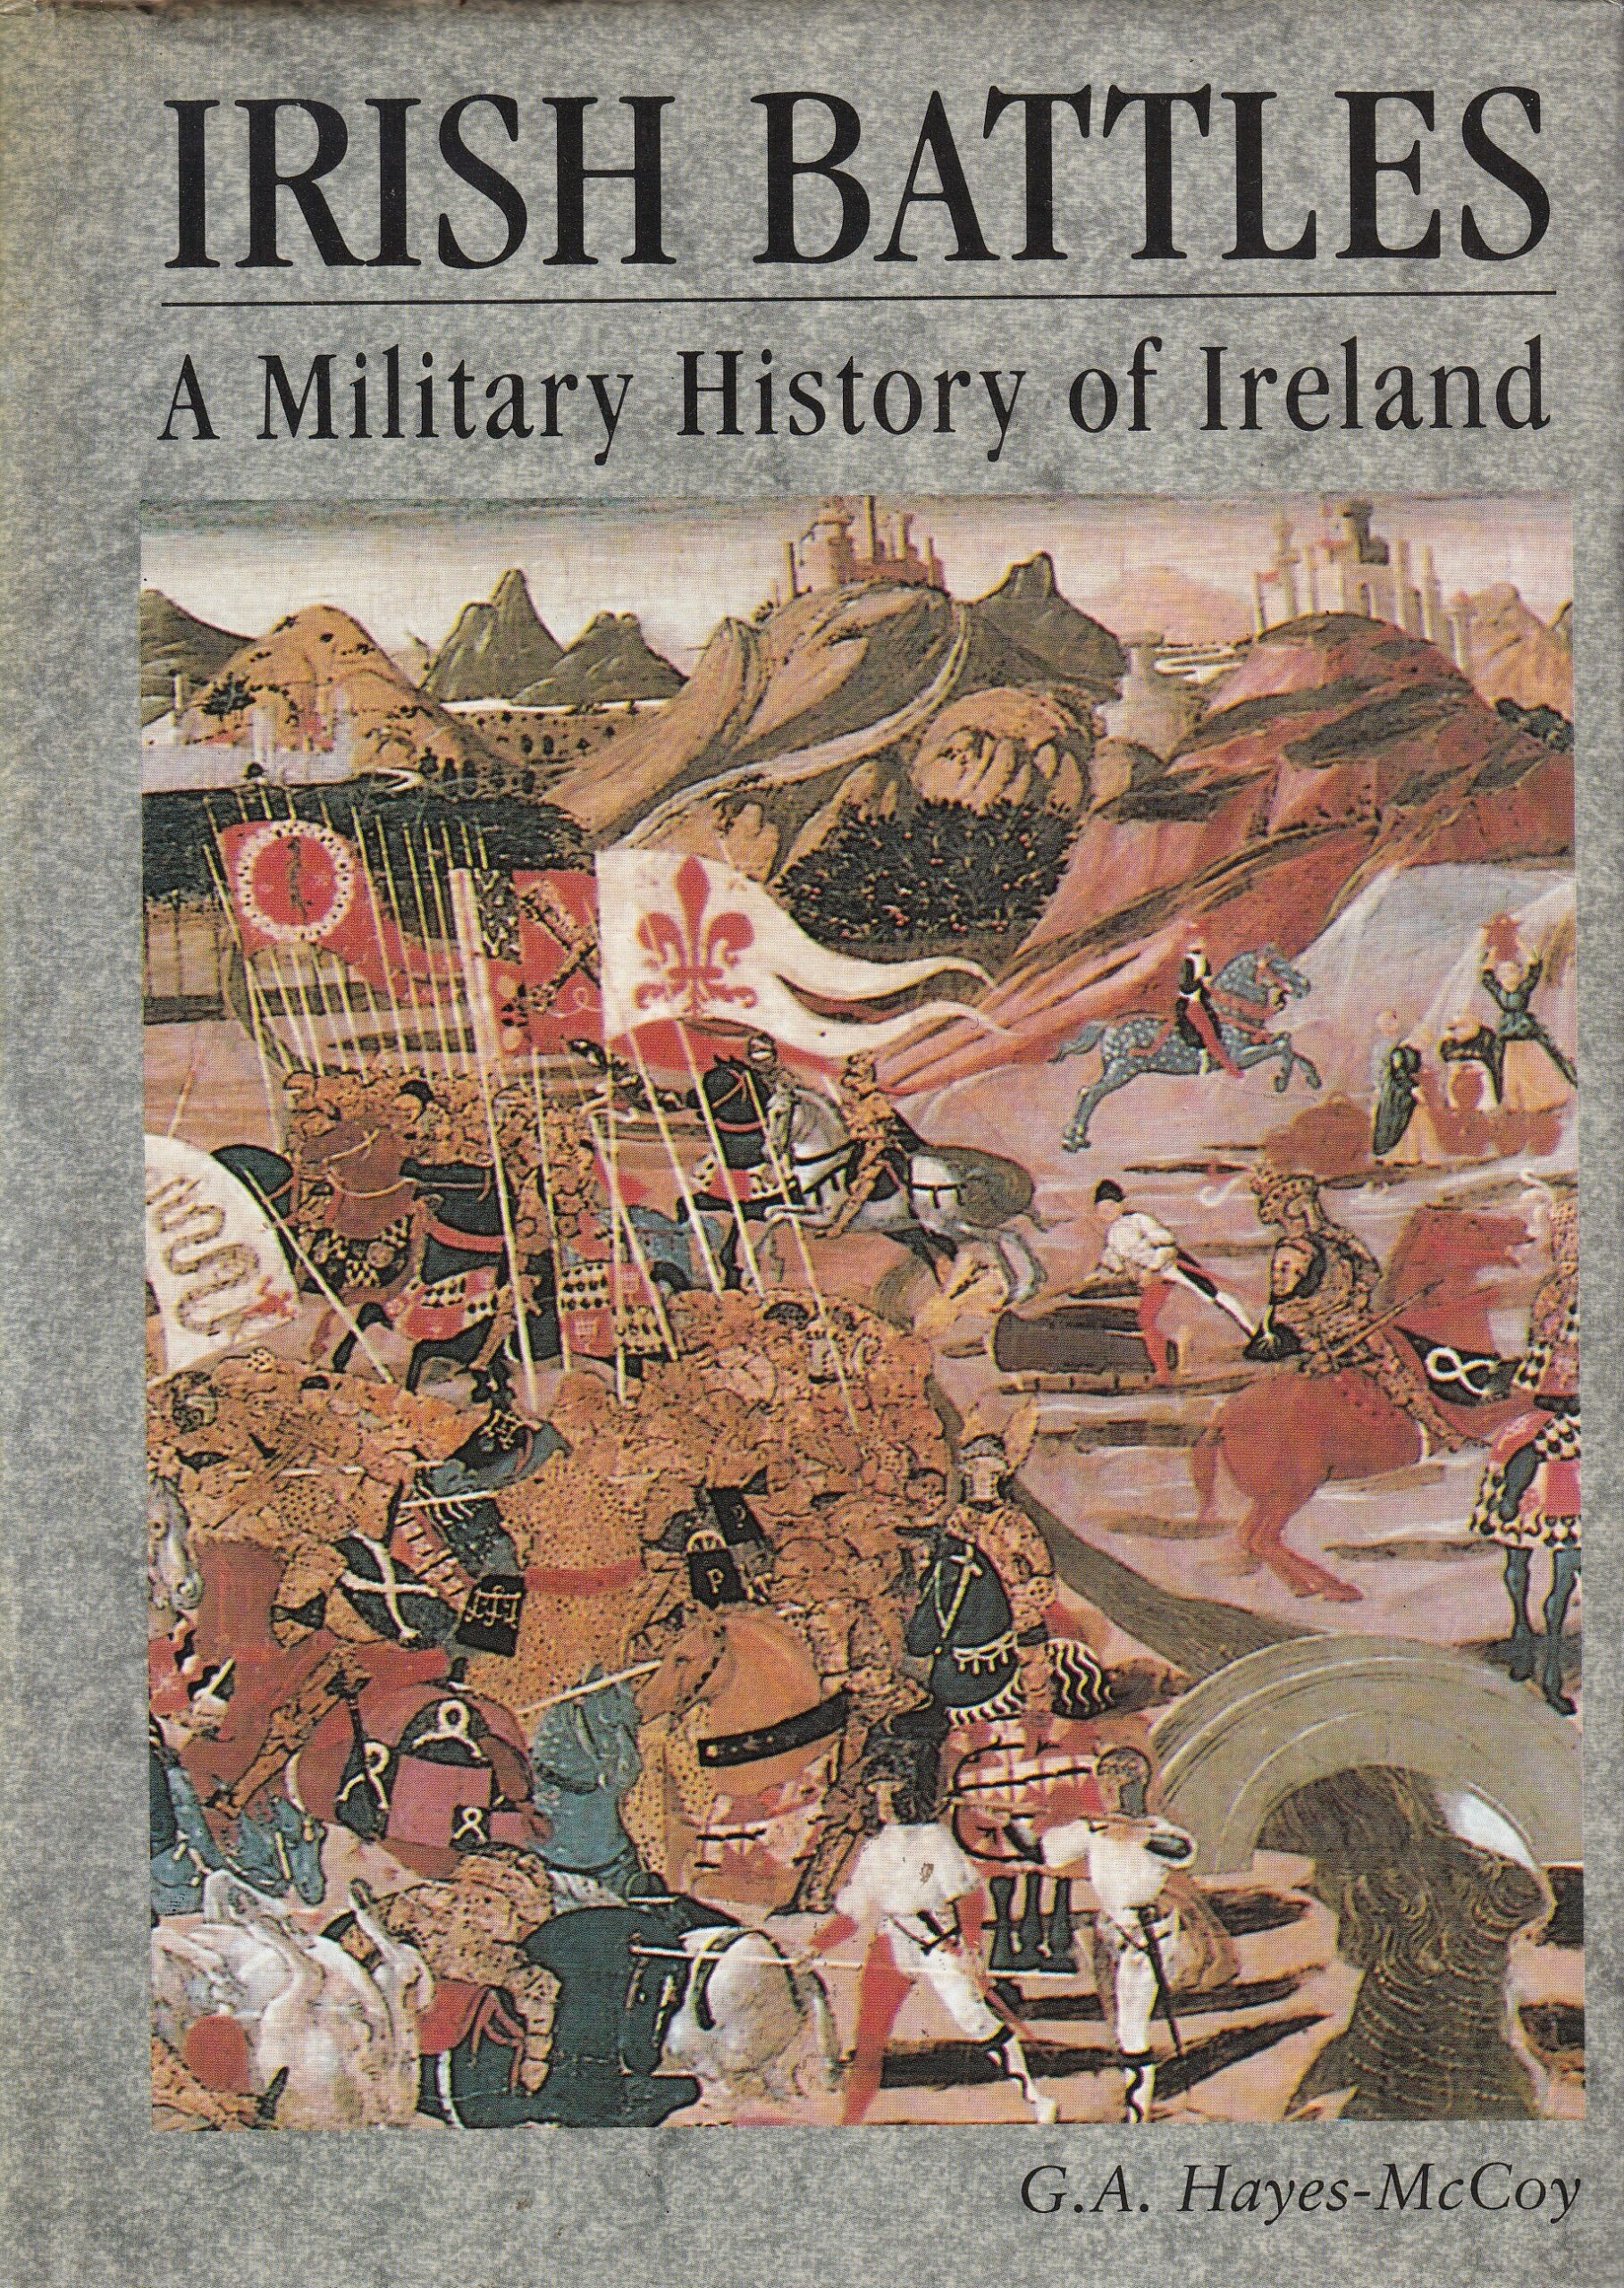 Irish Battles: A Military History of Ireland | G.A. Hayes-McCoy | Charlie Byrne's